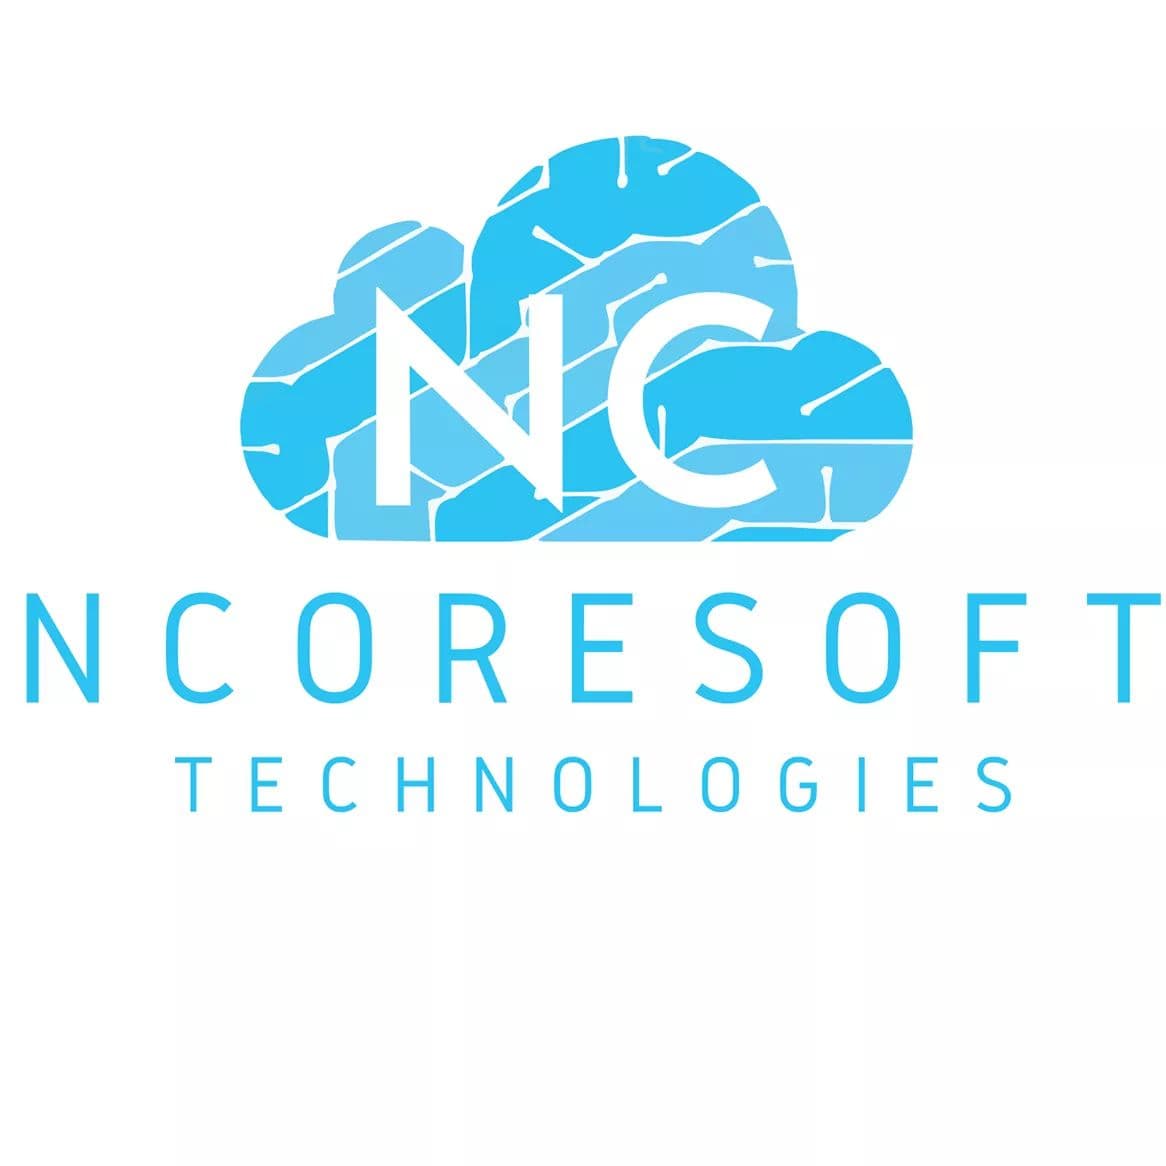 Ncoresoft's logo